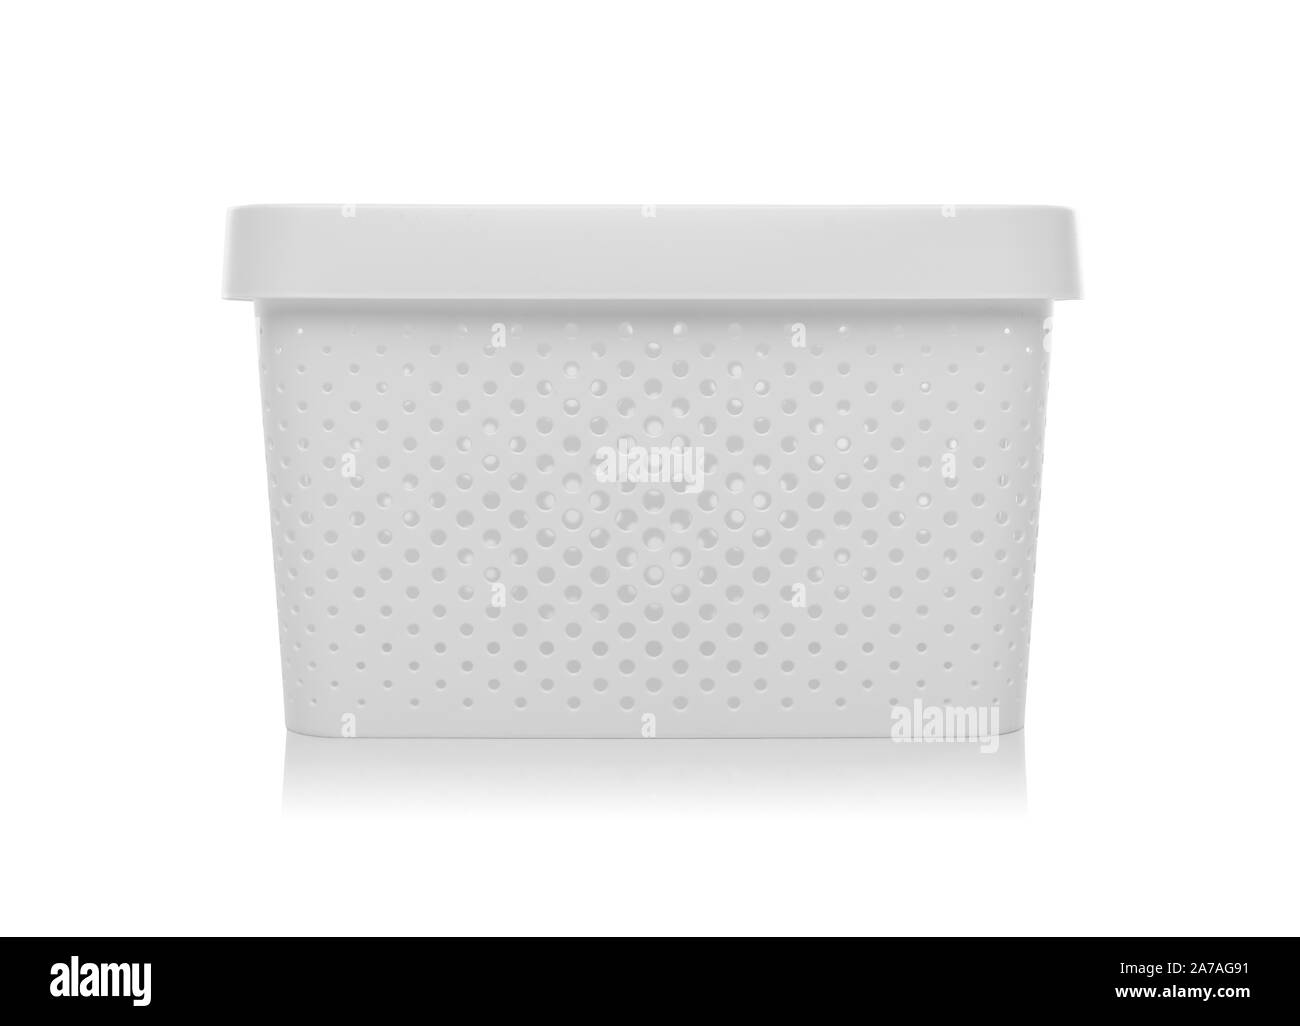 White plastic container. Stock Photo